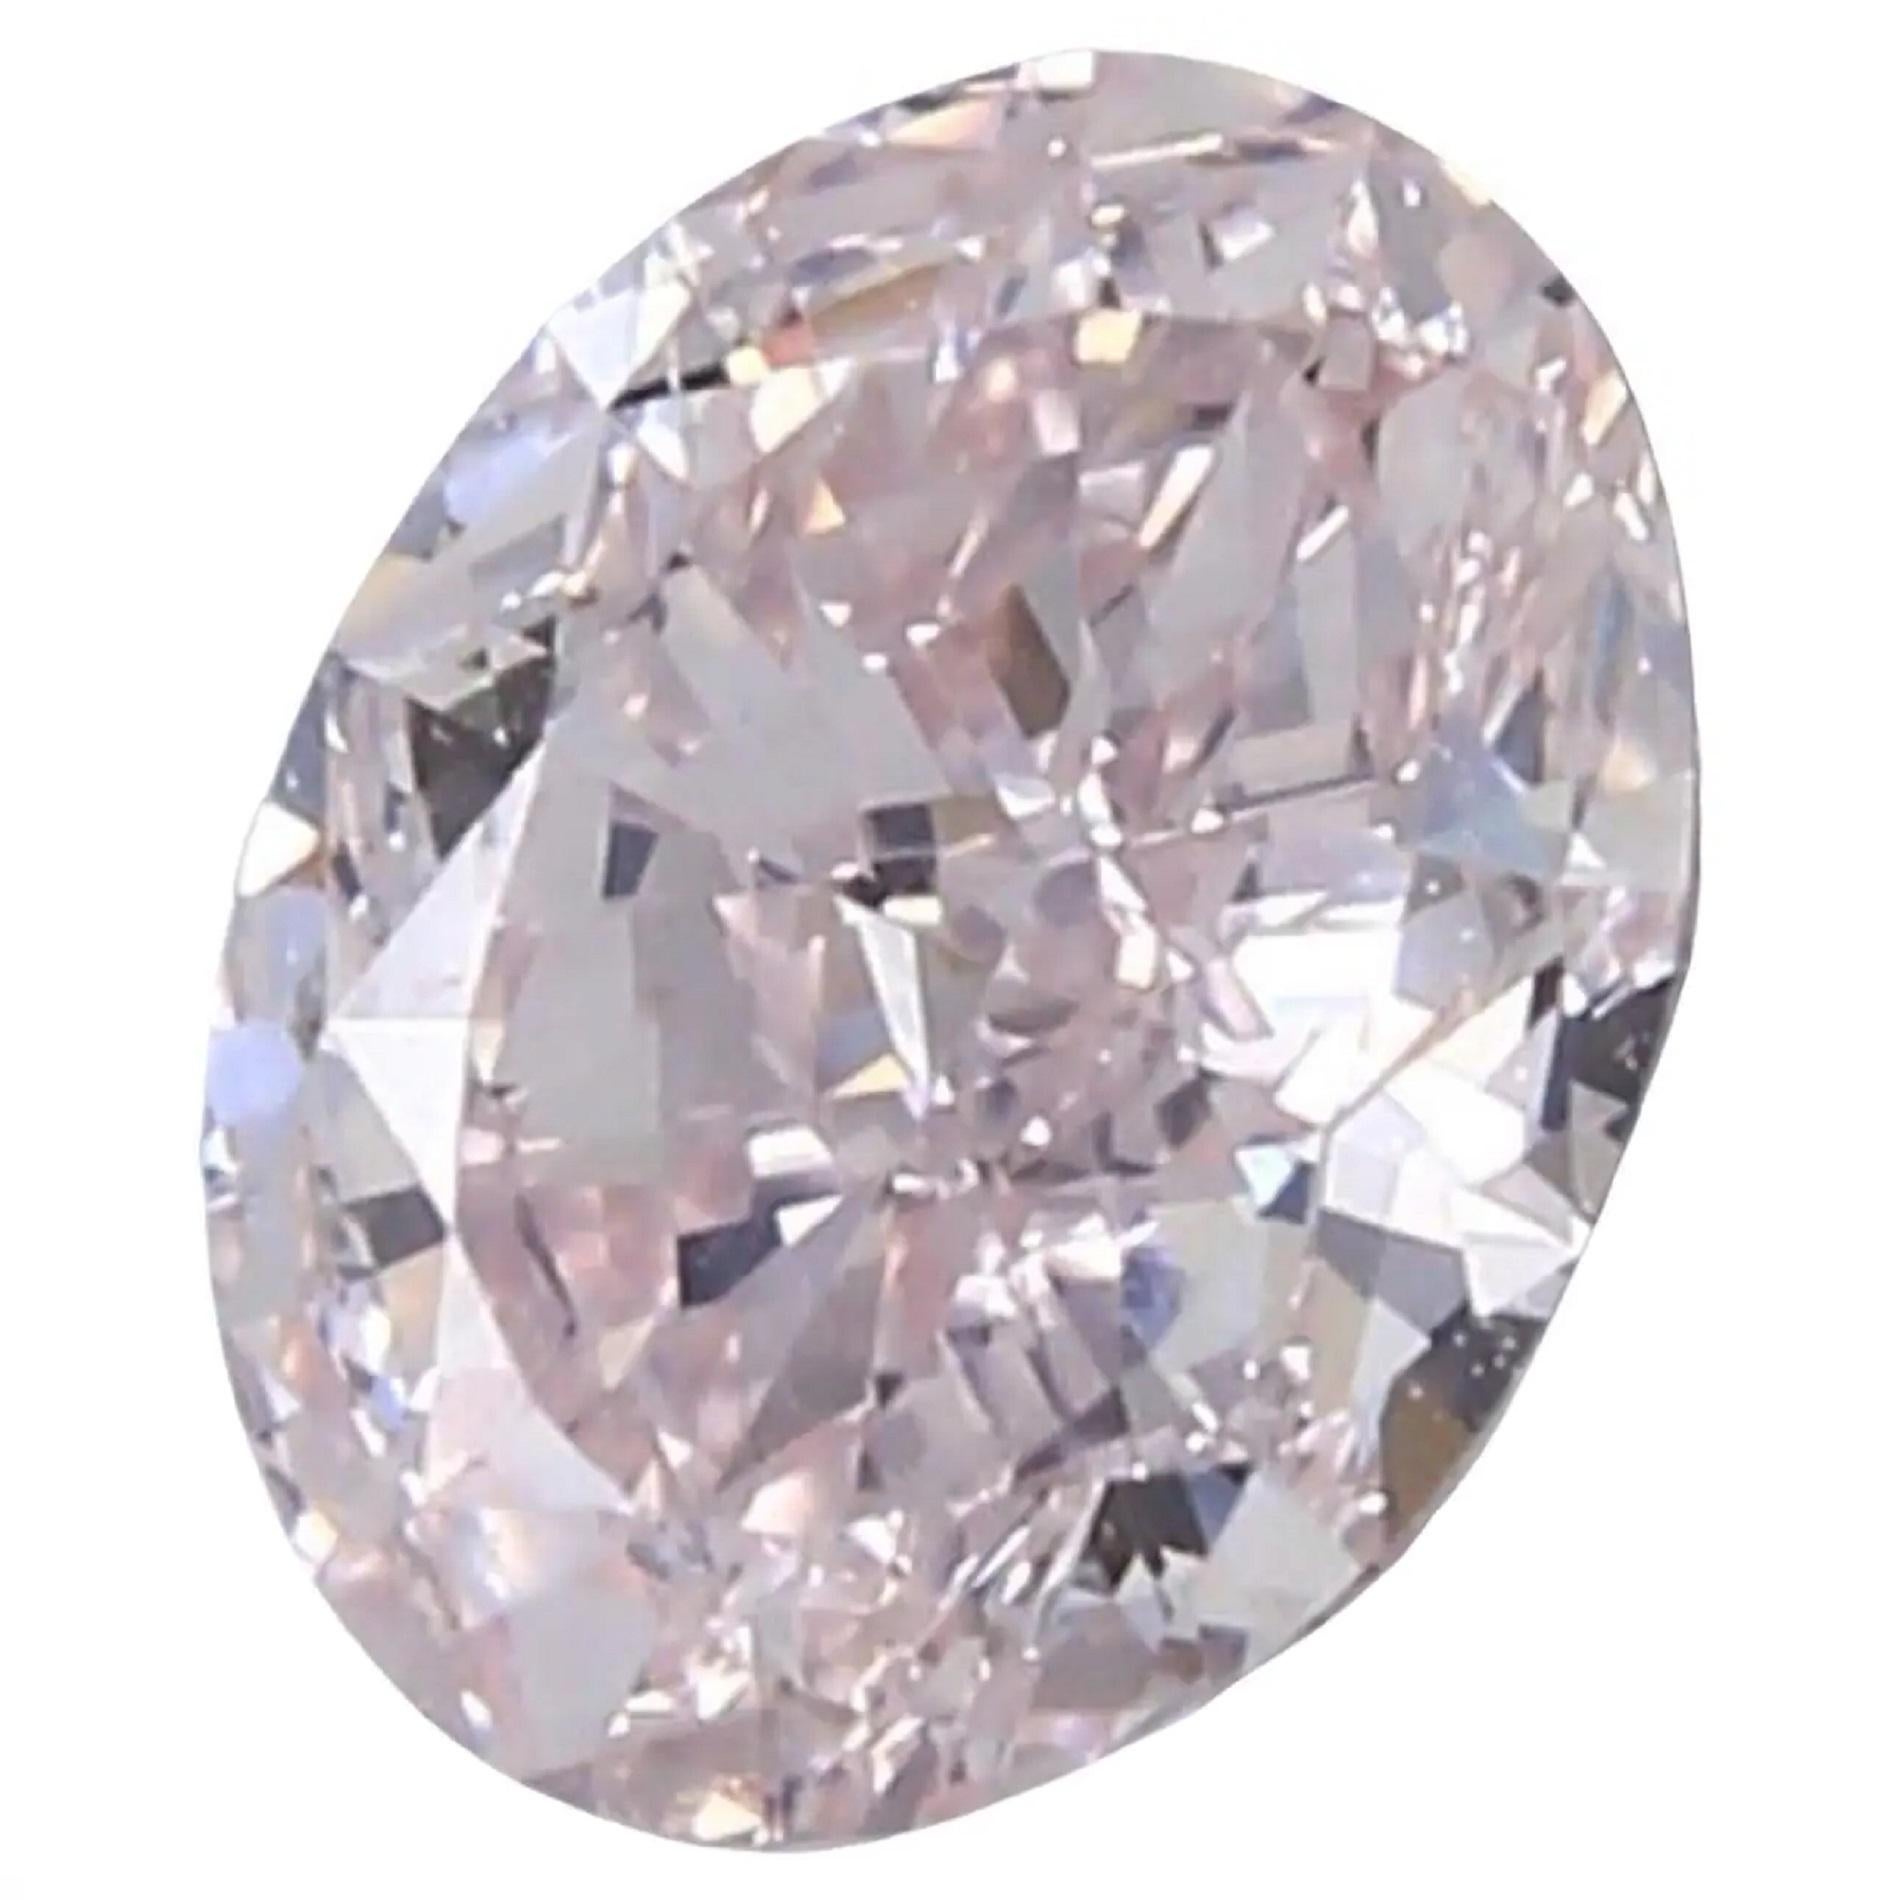 GIA Certified Fancy Pink Oval Diamond 
1.50 carats